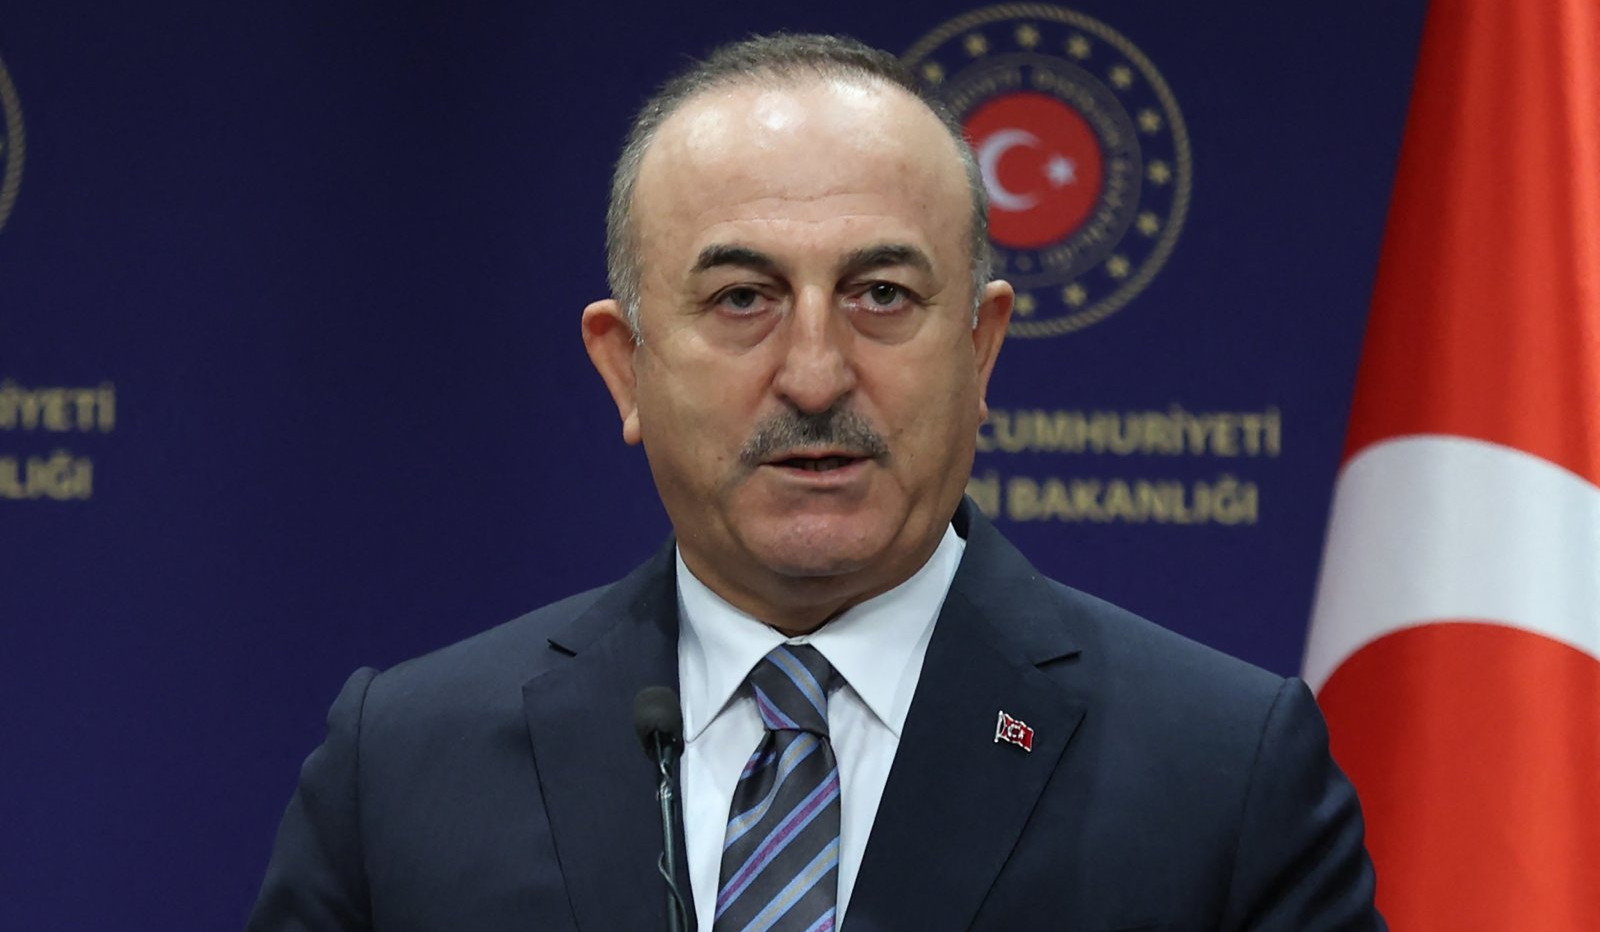 Turkey may approve Sweden’s NATO bid before alliance’s July summit: Çavuşoğlu